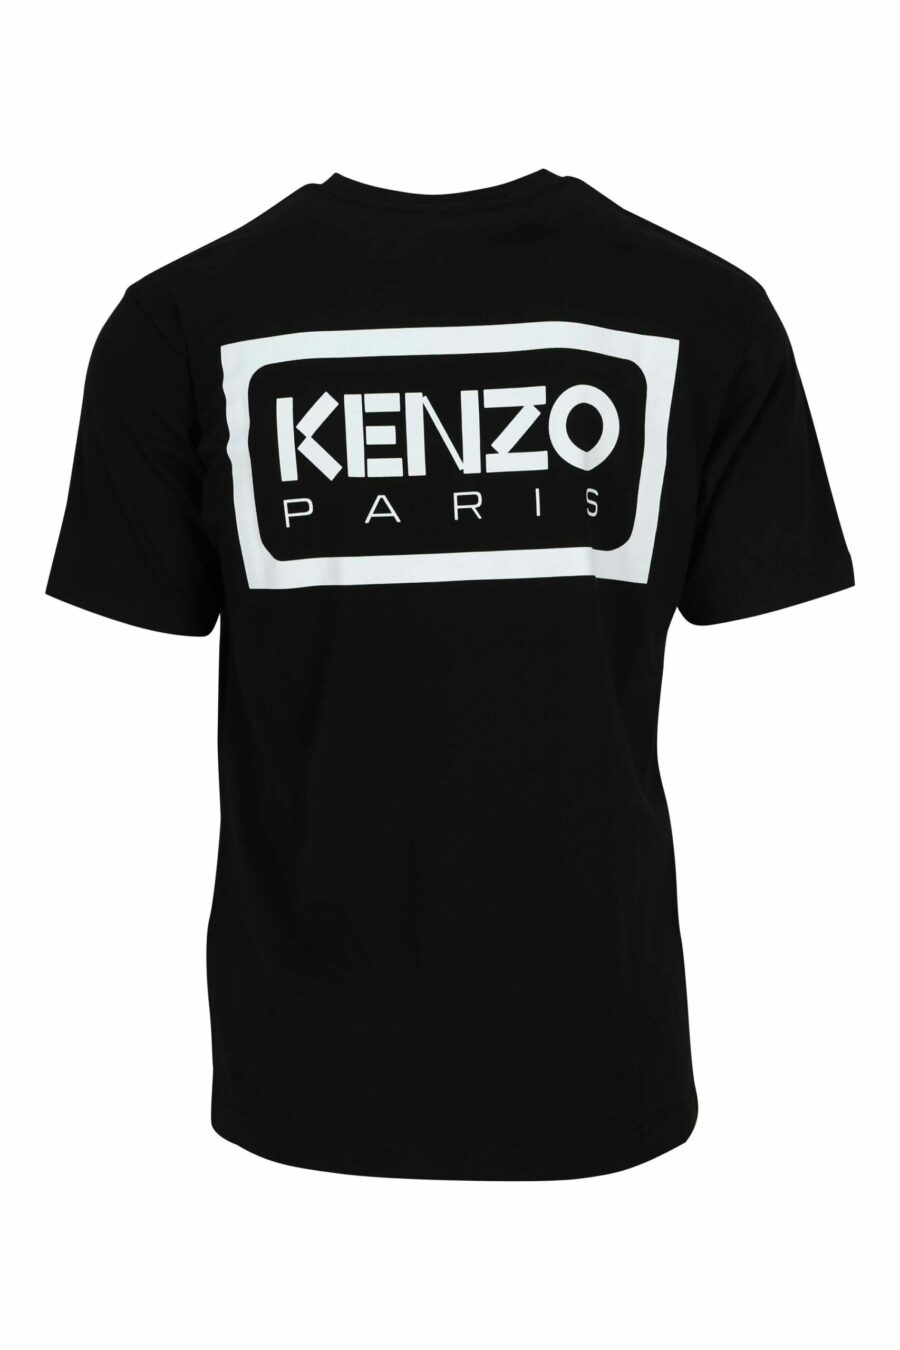 T-shirt preta com minilogo "KP classic" - 3612230624443 1 scaled